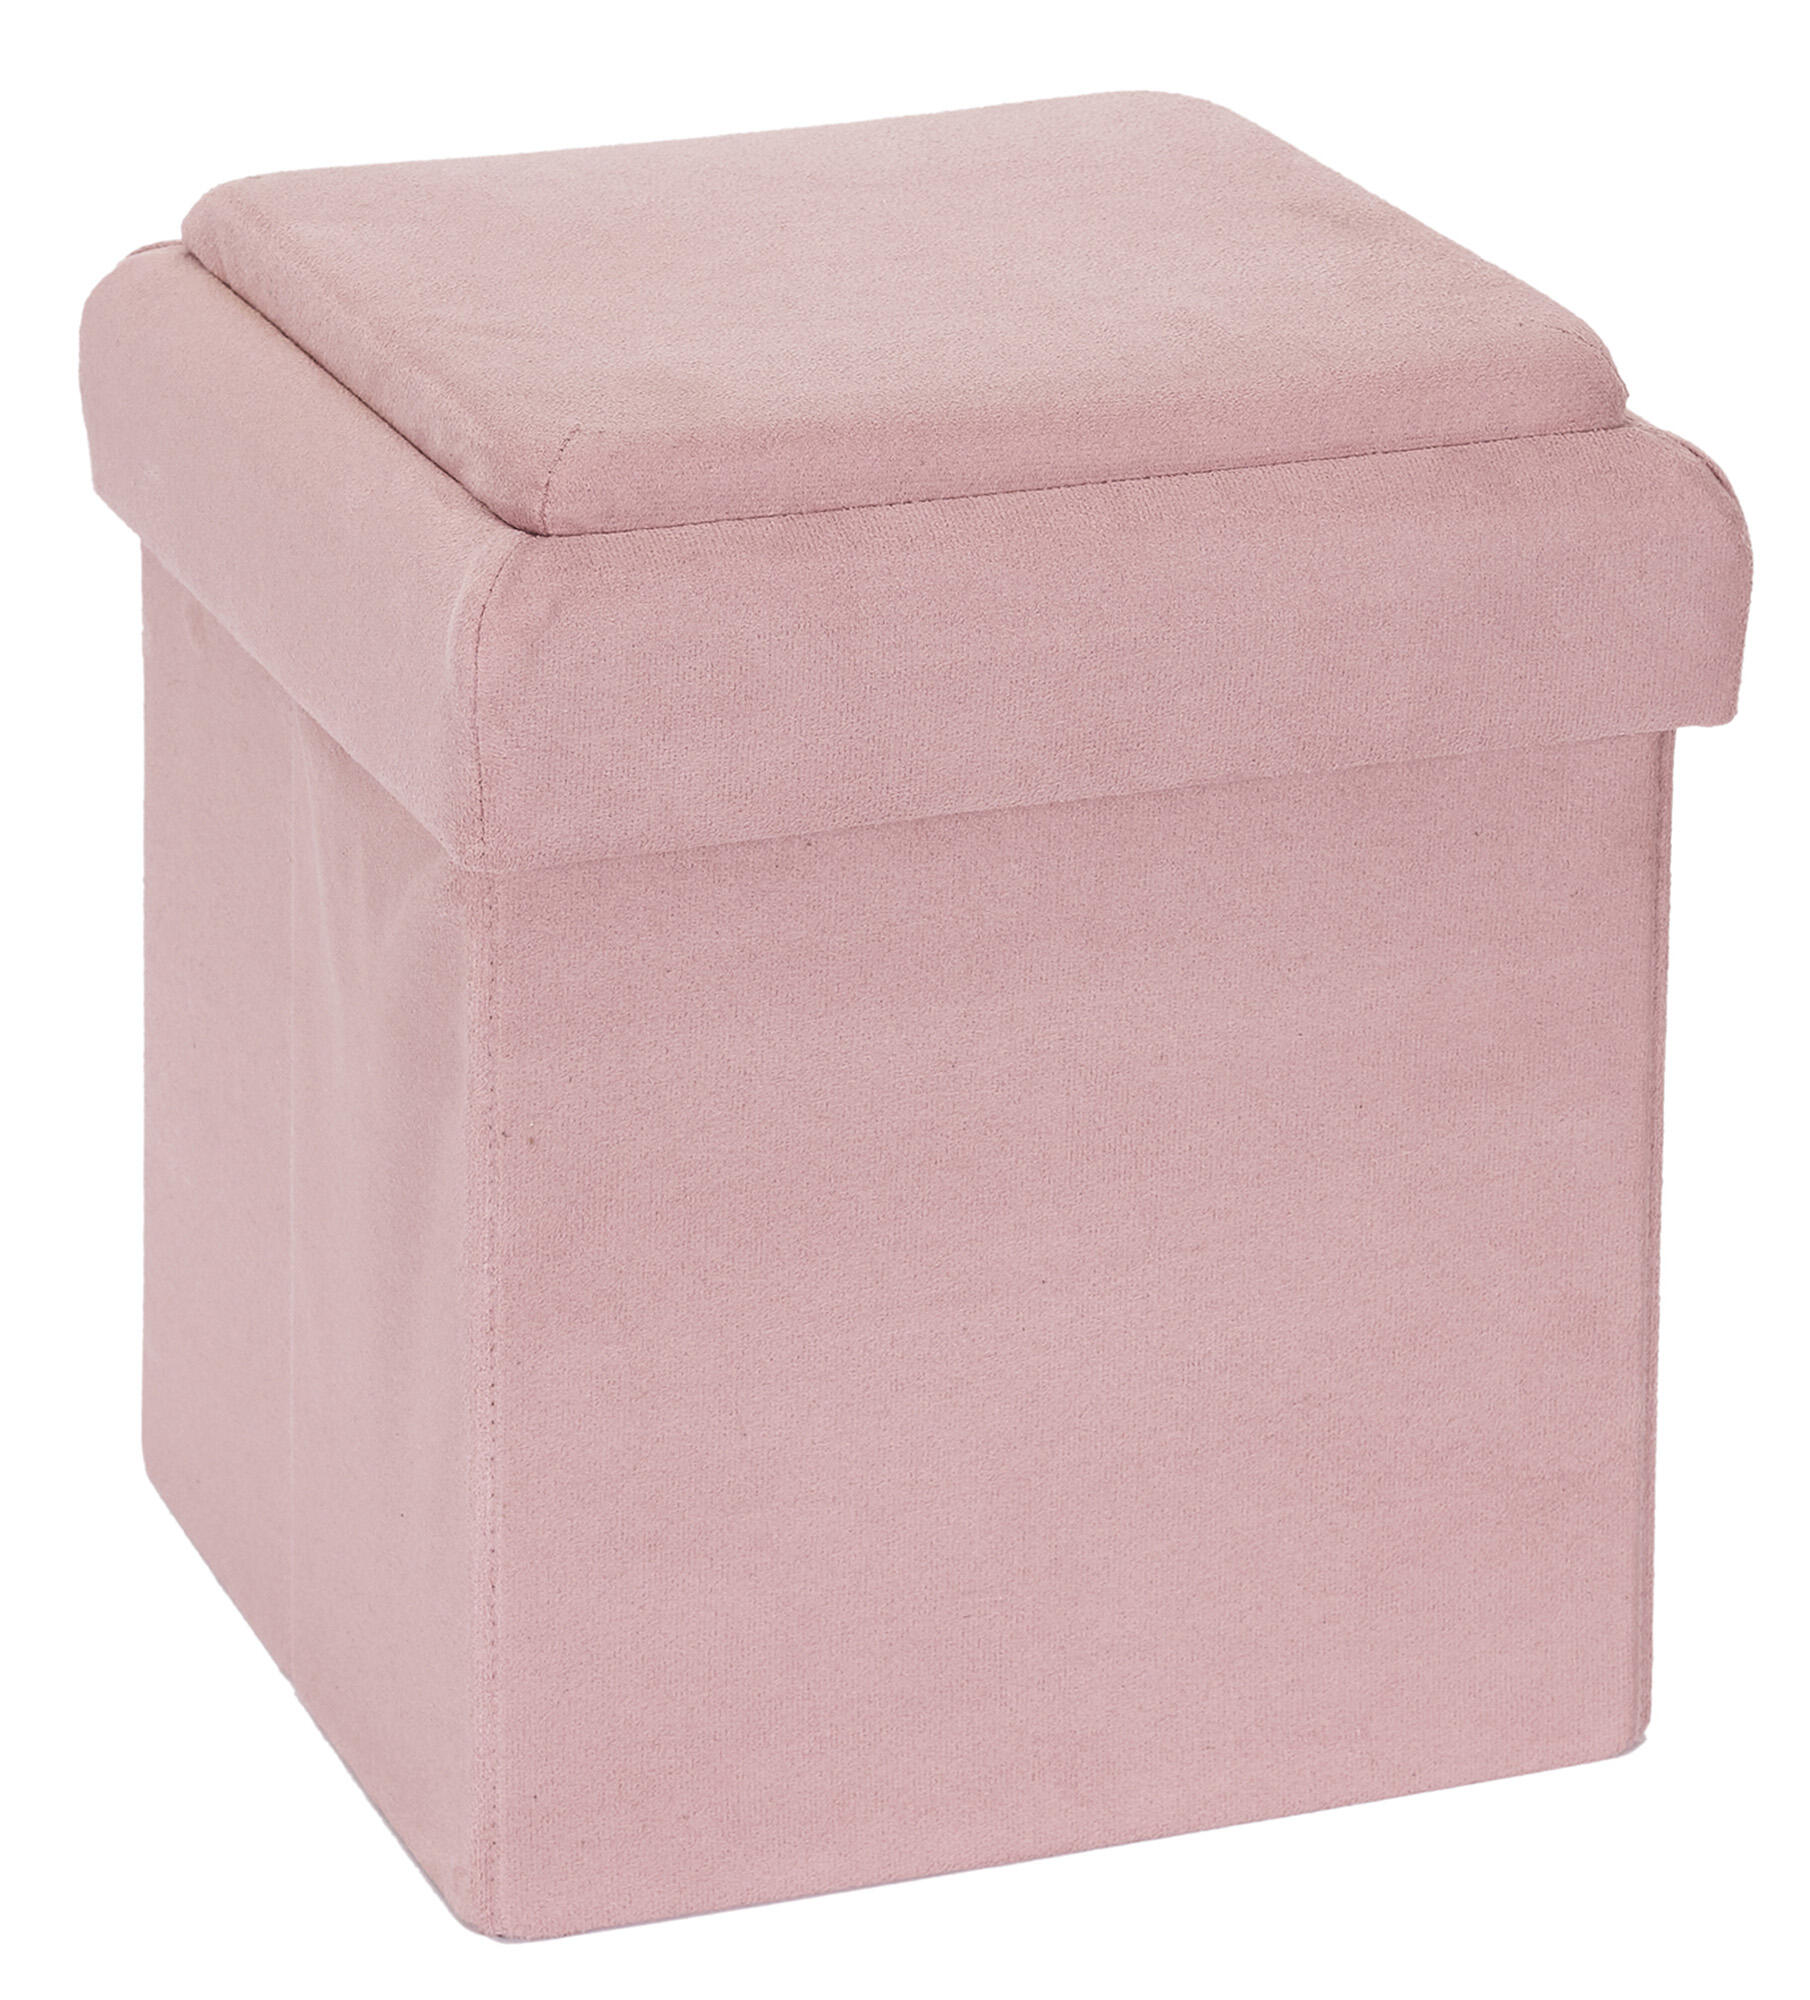 Puf almacenaje terciopelo rosa 2 tonos banda acero dorad.7 Ø37x43 Mod. 49414